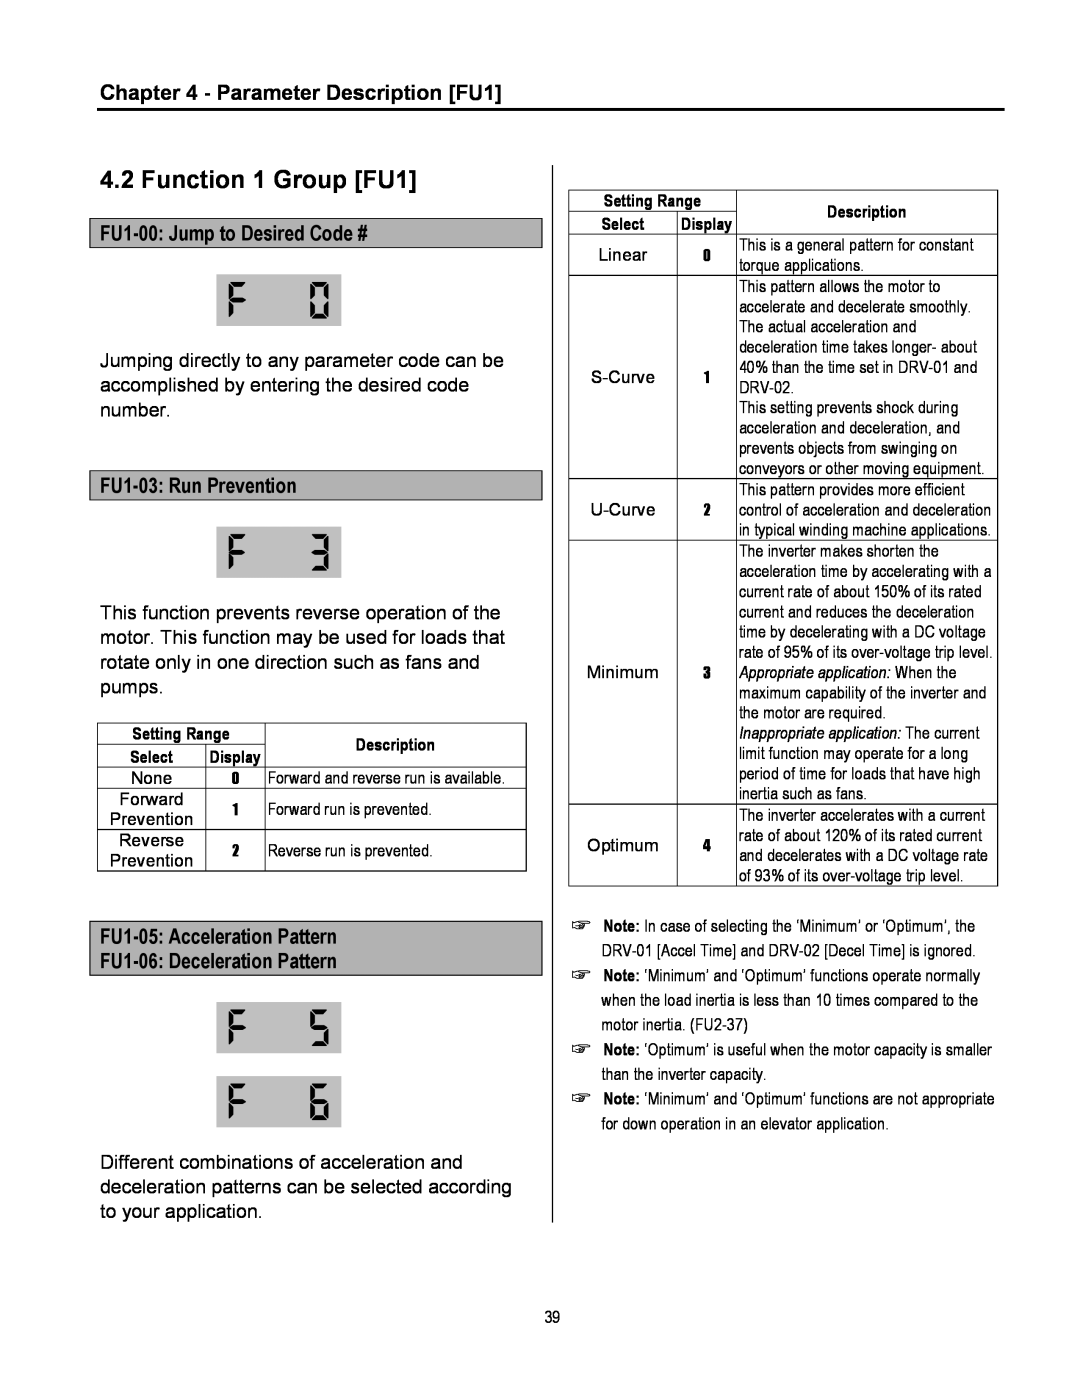 Cleveland Range inverter manual Function 1 Group FU1, Parameter Description FU1, FU1-00 Jump to Desired Code # 